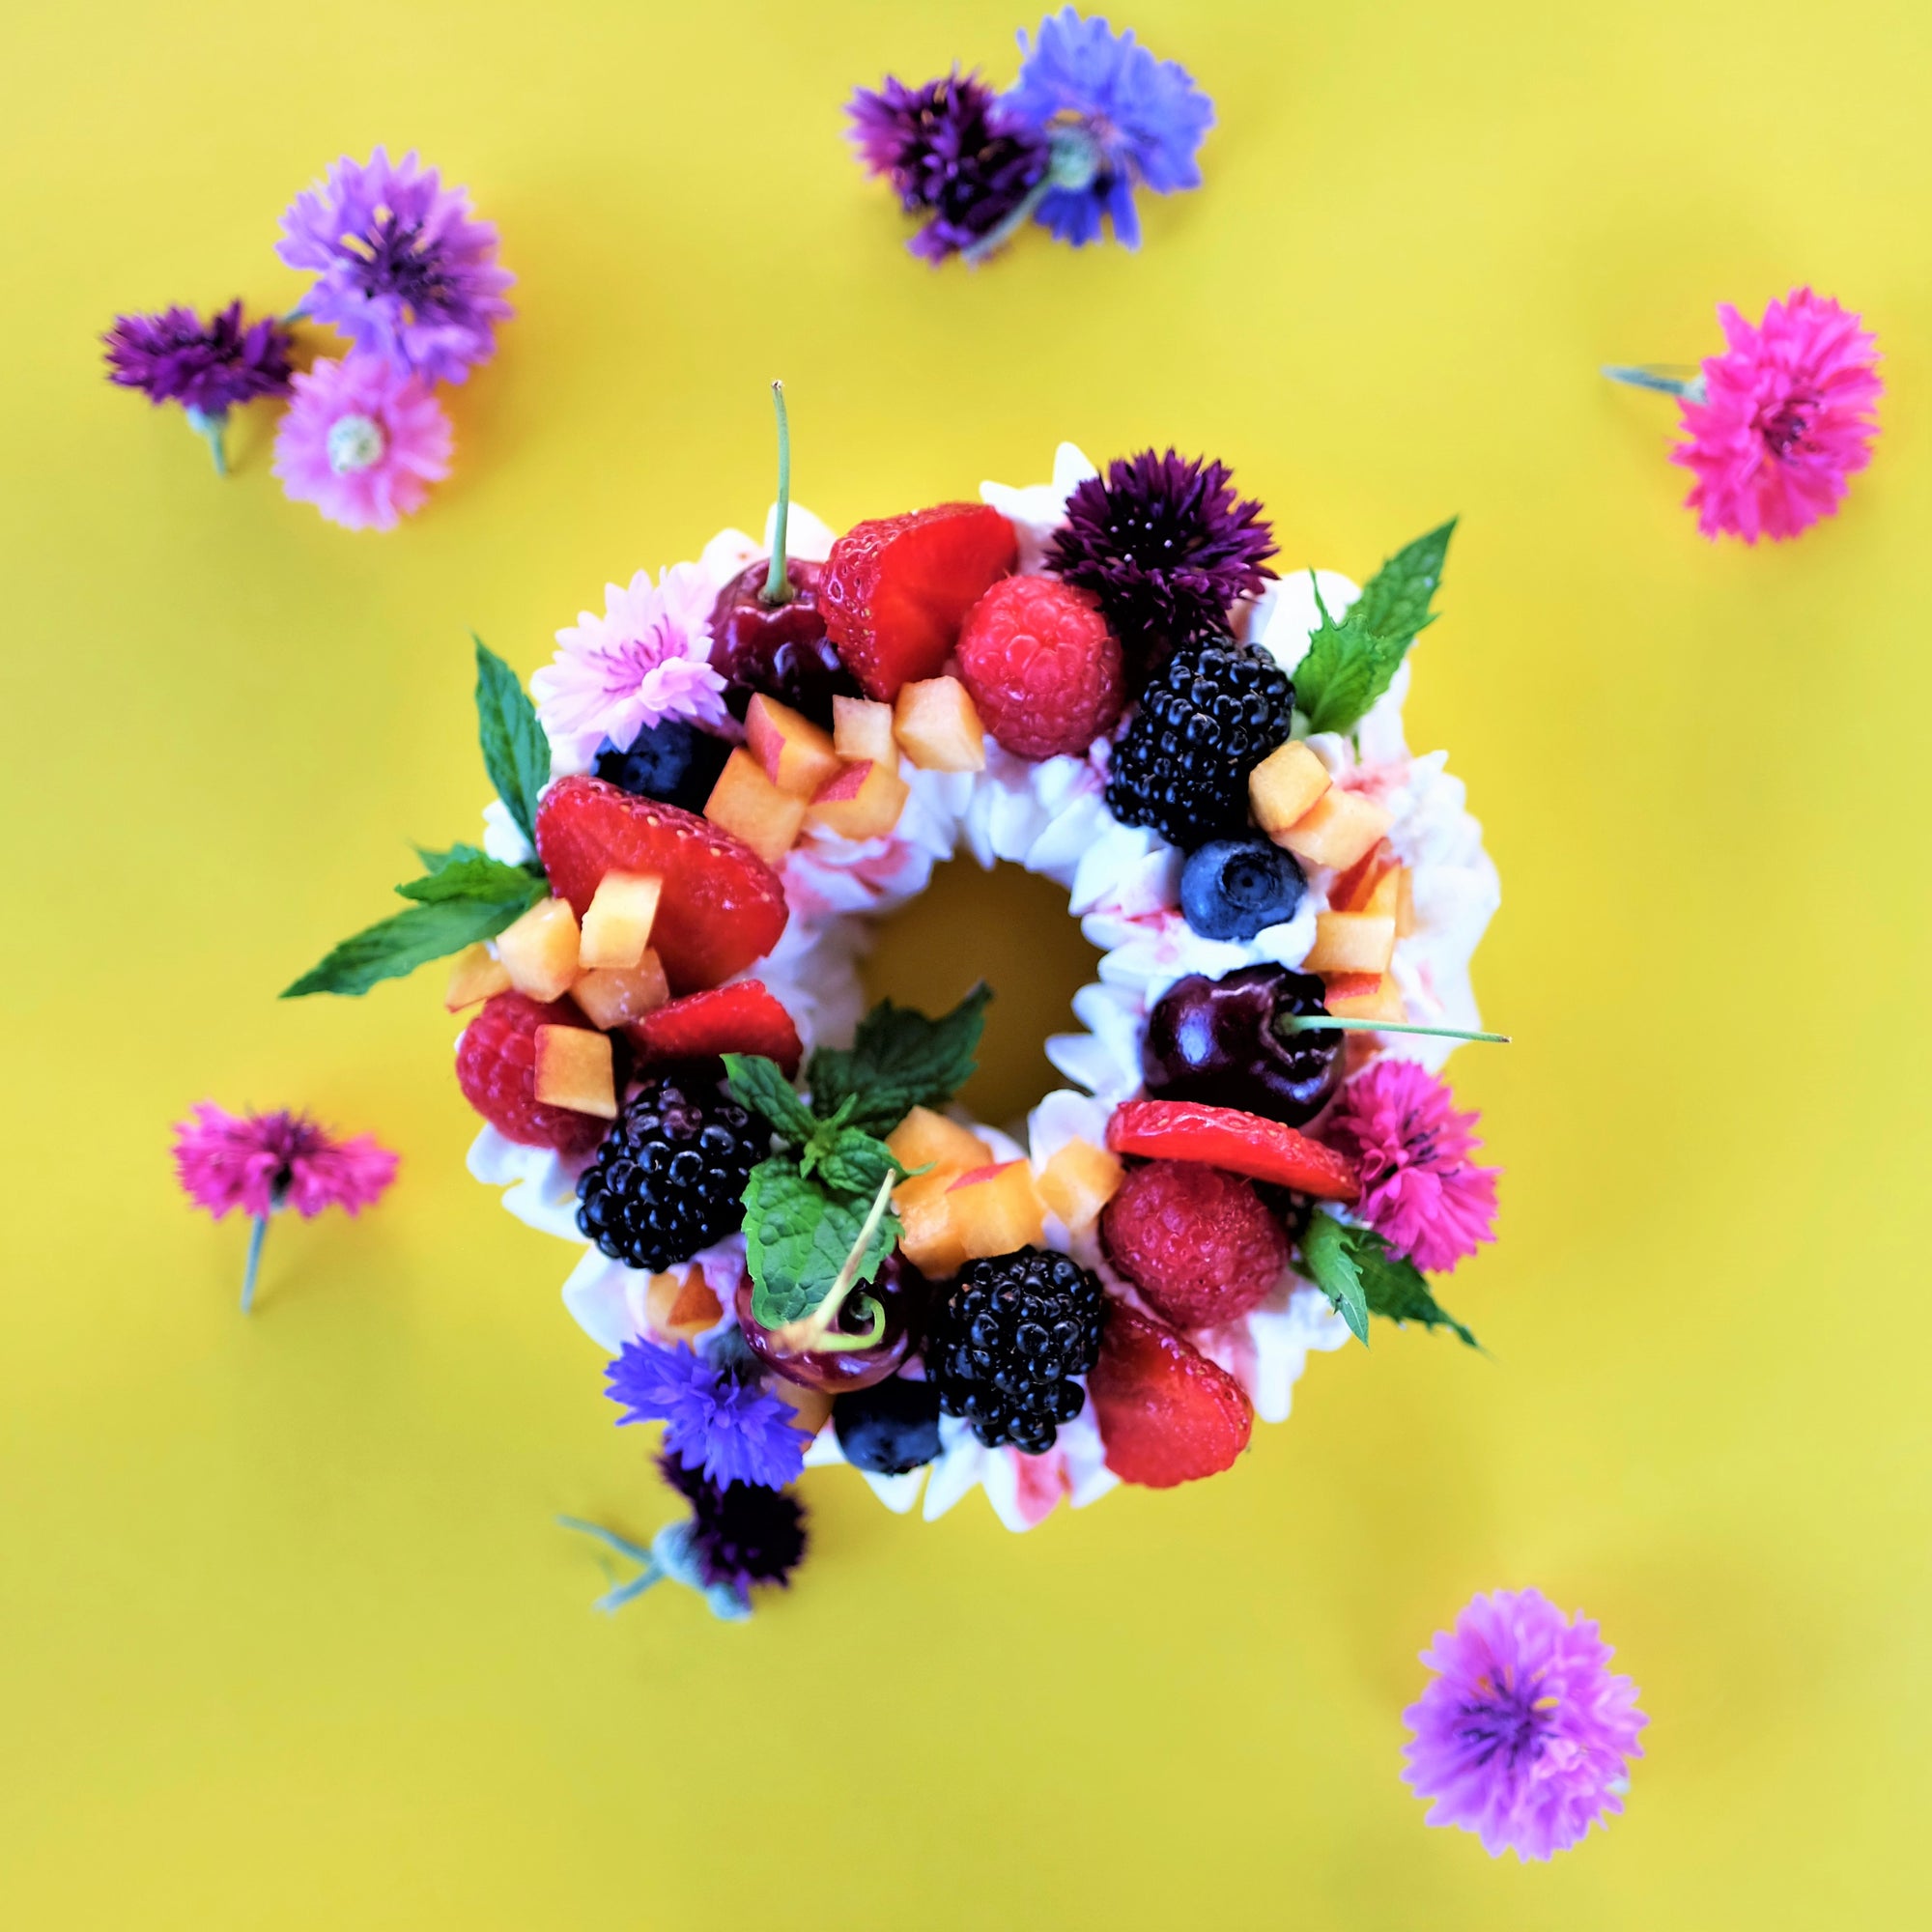 Mini Pavlova Wreaths, Fruits Pavlova, Gluten-Free Dessert, Summer Dessert